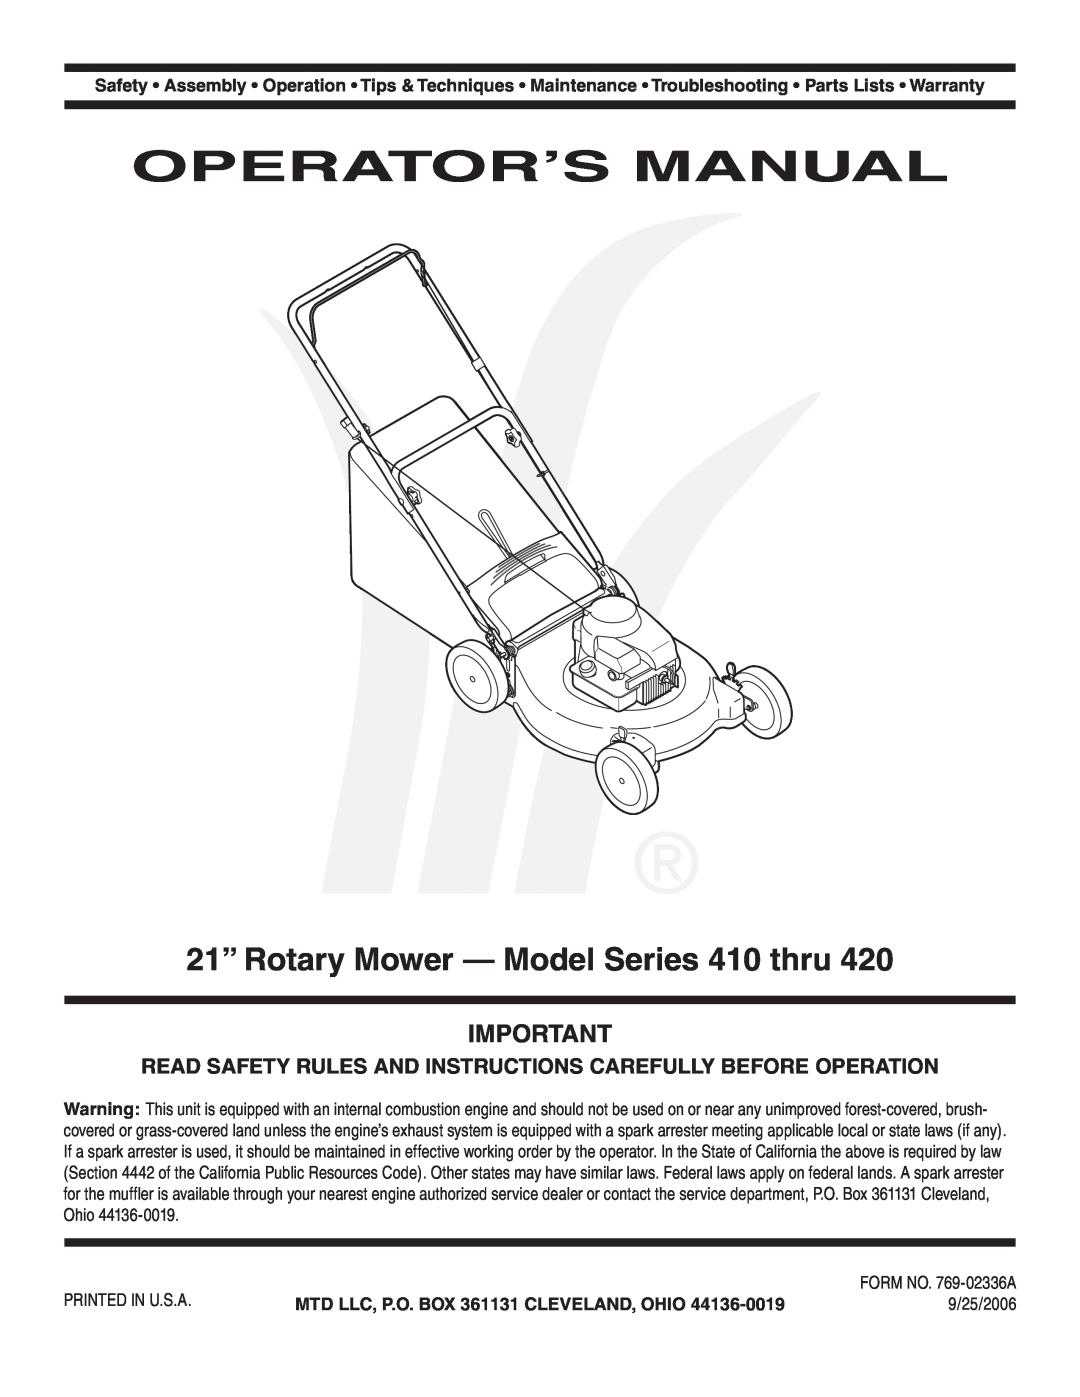 Briggs & Stratton Series 410 thru 420 warranty Operator’S Manual, 21” Rotary Mower - Model Series 410 thru 